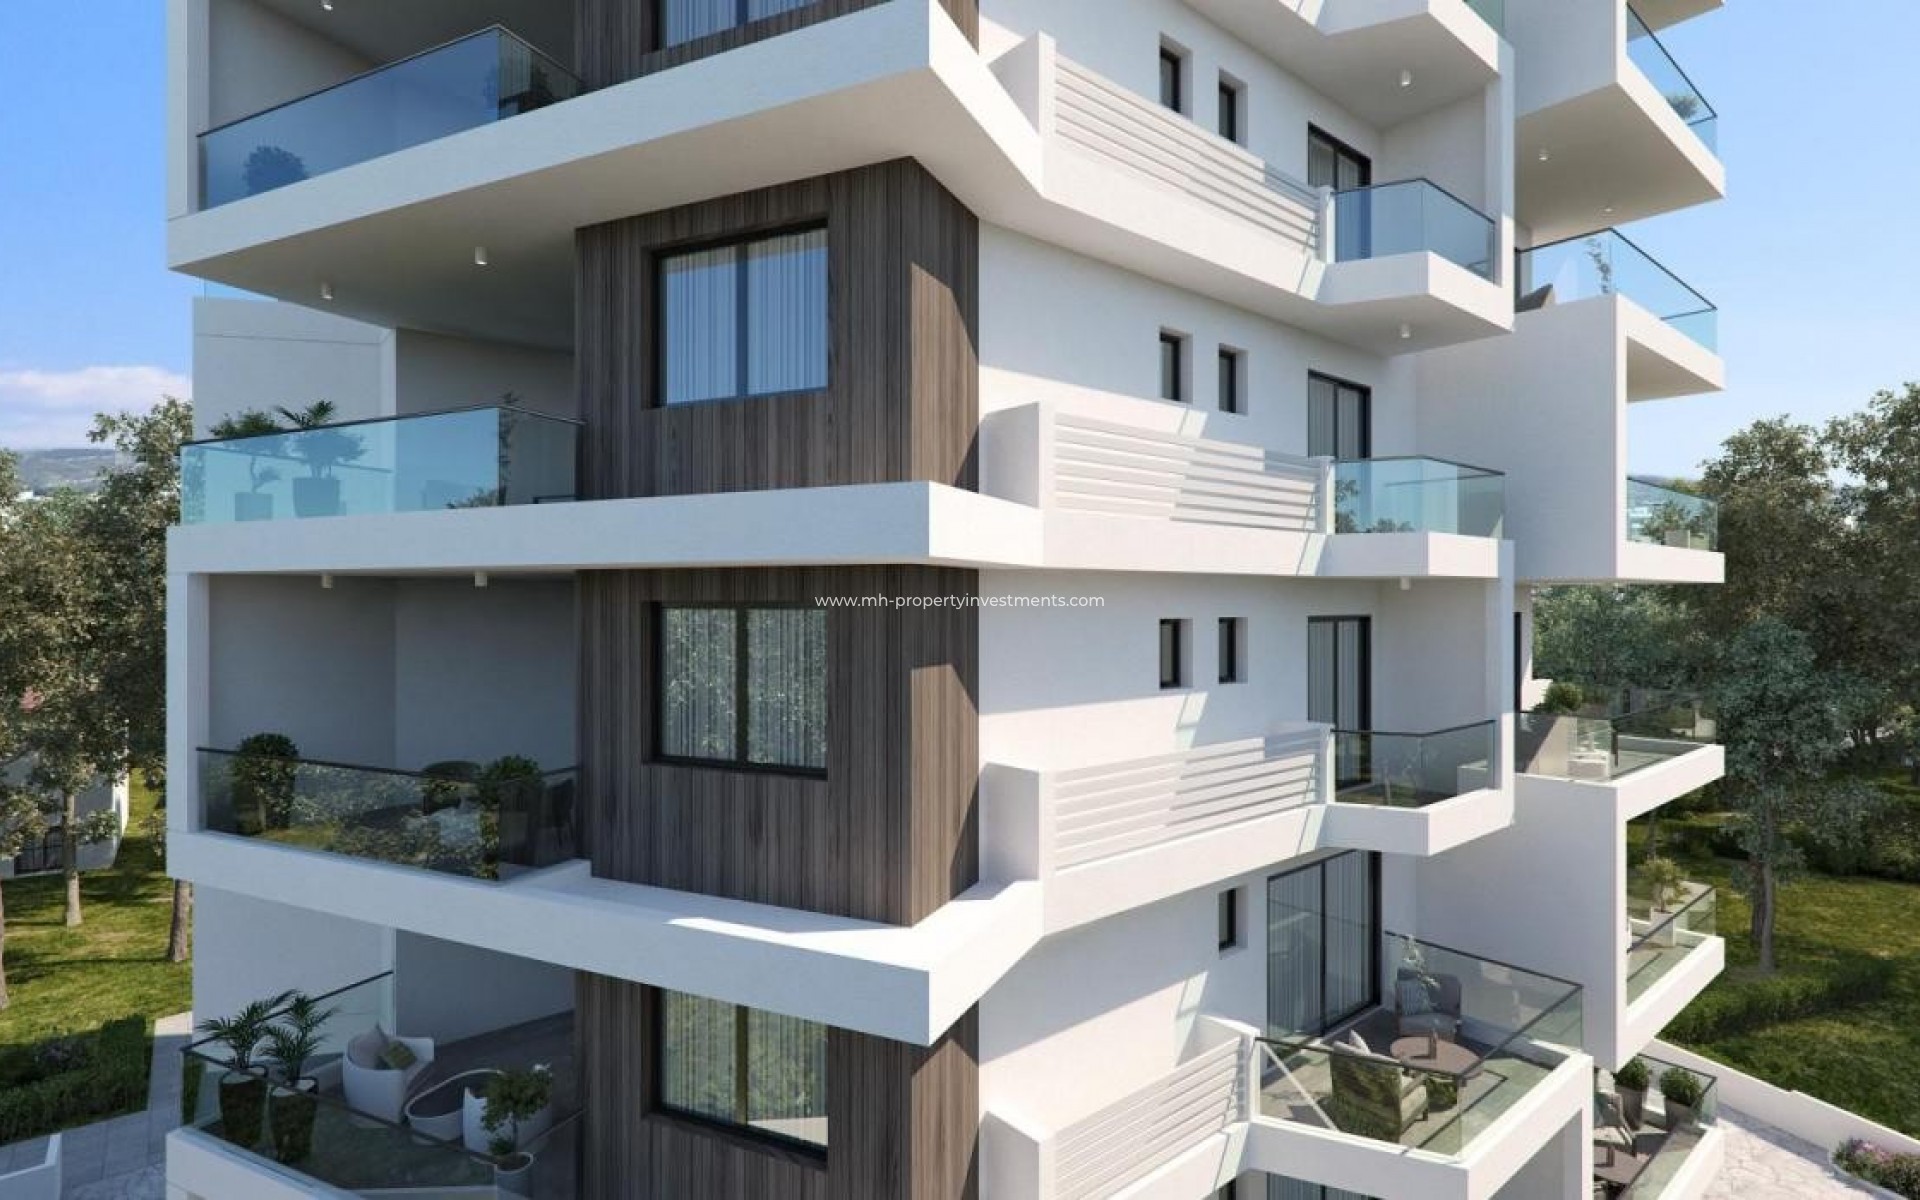 en cours de construction - Apartment - Larnaca - Larnaca (City) - Makenzy